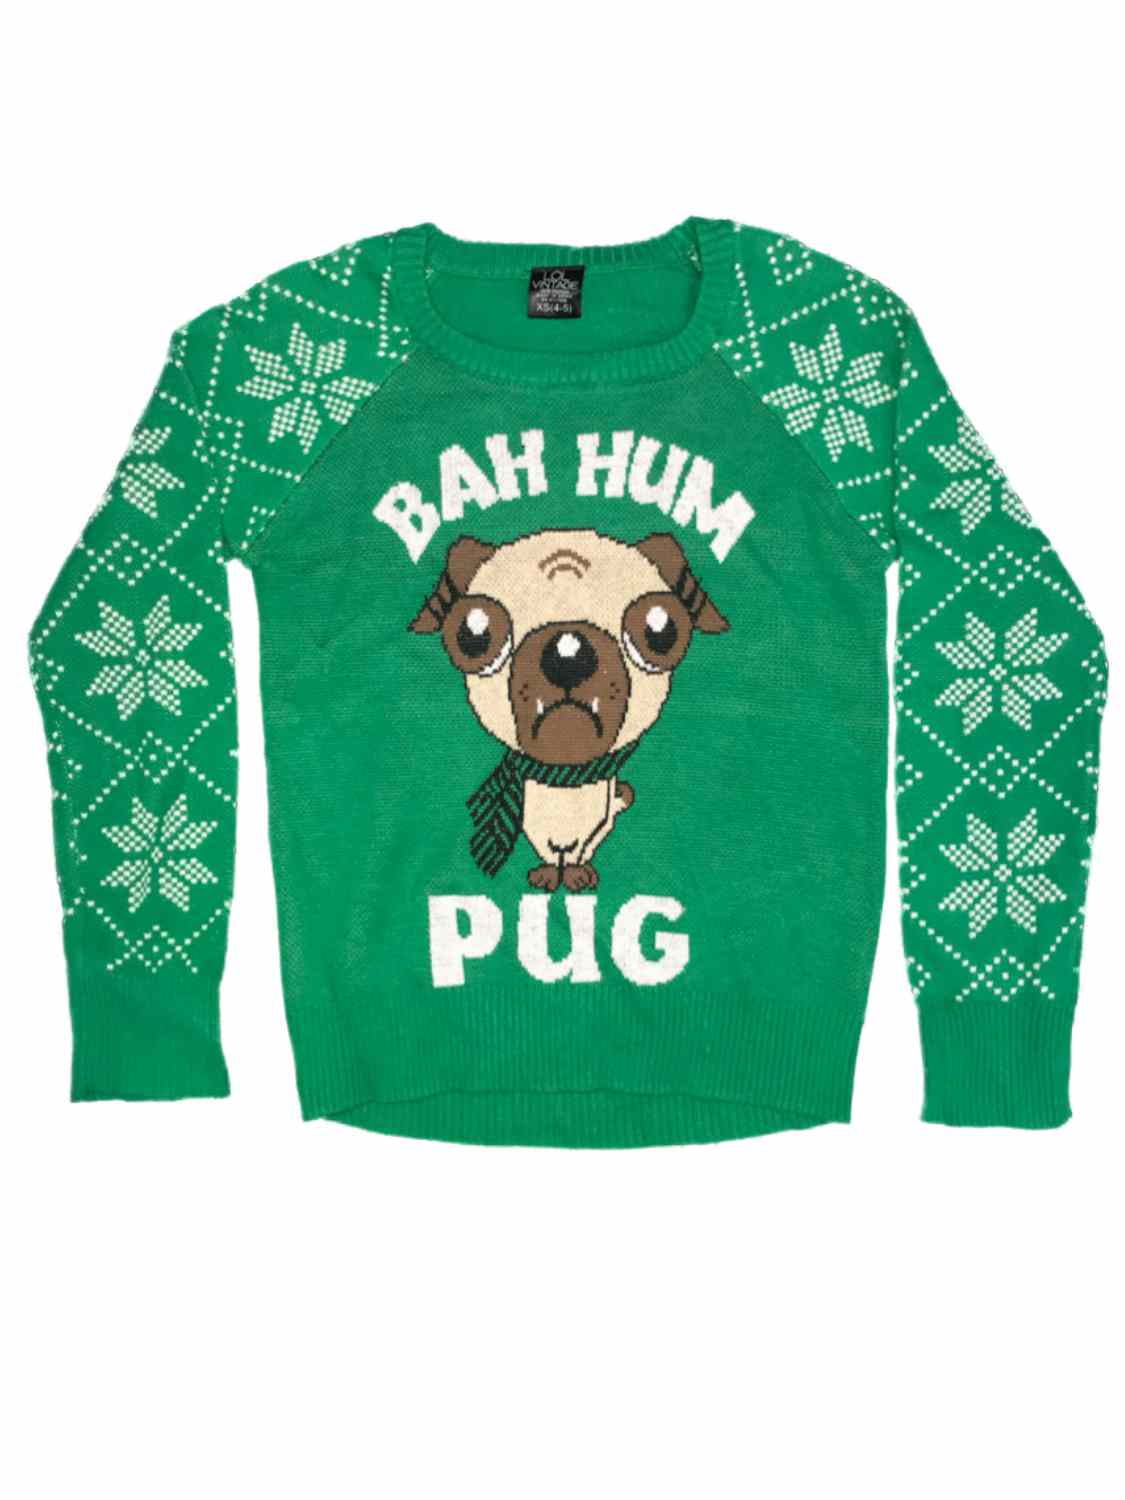 Bah Humpug Christmas Sweater Jumper Sweatshirt Xmas Funny Pug Dog Ugly Knit Gift